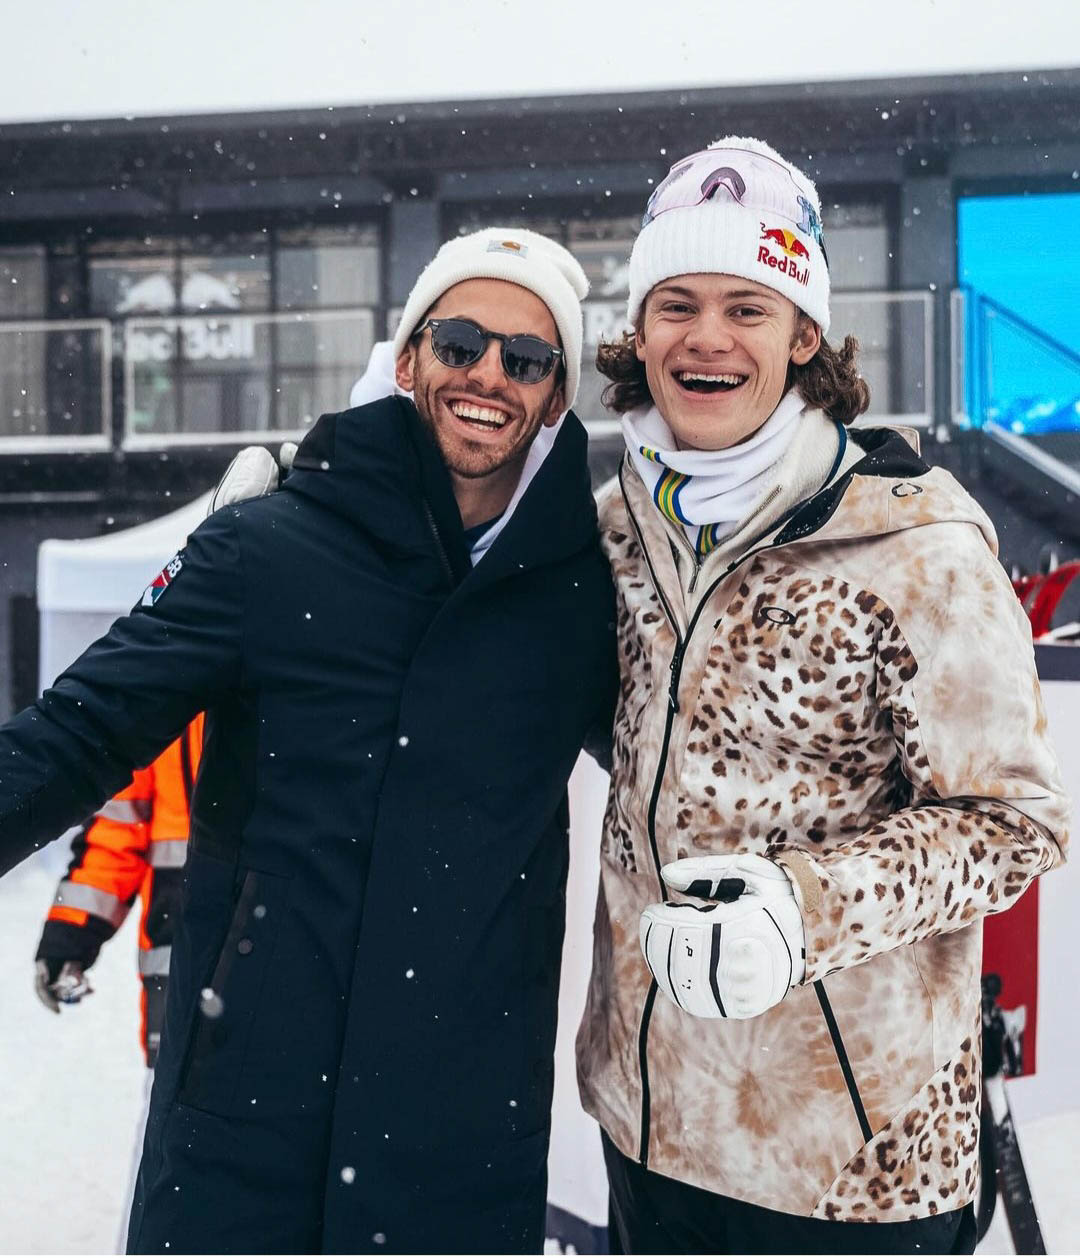 British ski racer Charlie Raposo smiles, arm around ex Norwegian racer Braathen, standing on snow wearing beanies